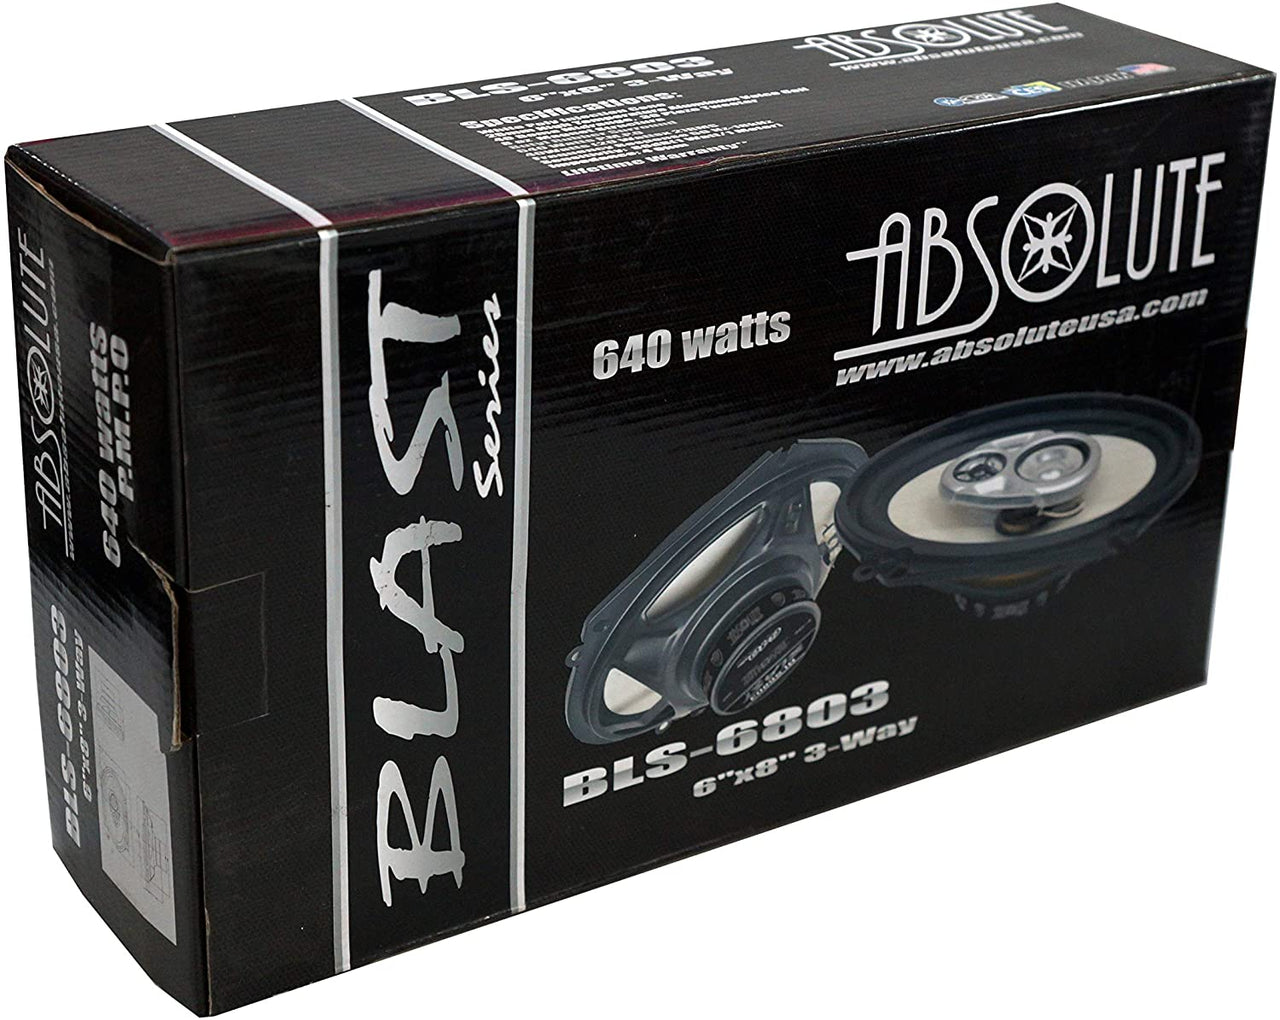 Absolute BLS-6803 Blast Series 6x8 Inches 3 Way Car/Marine/ATV/UTV Speakers 640 Watts